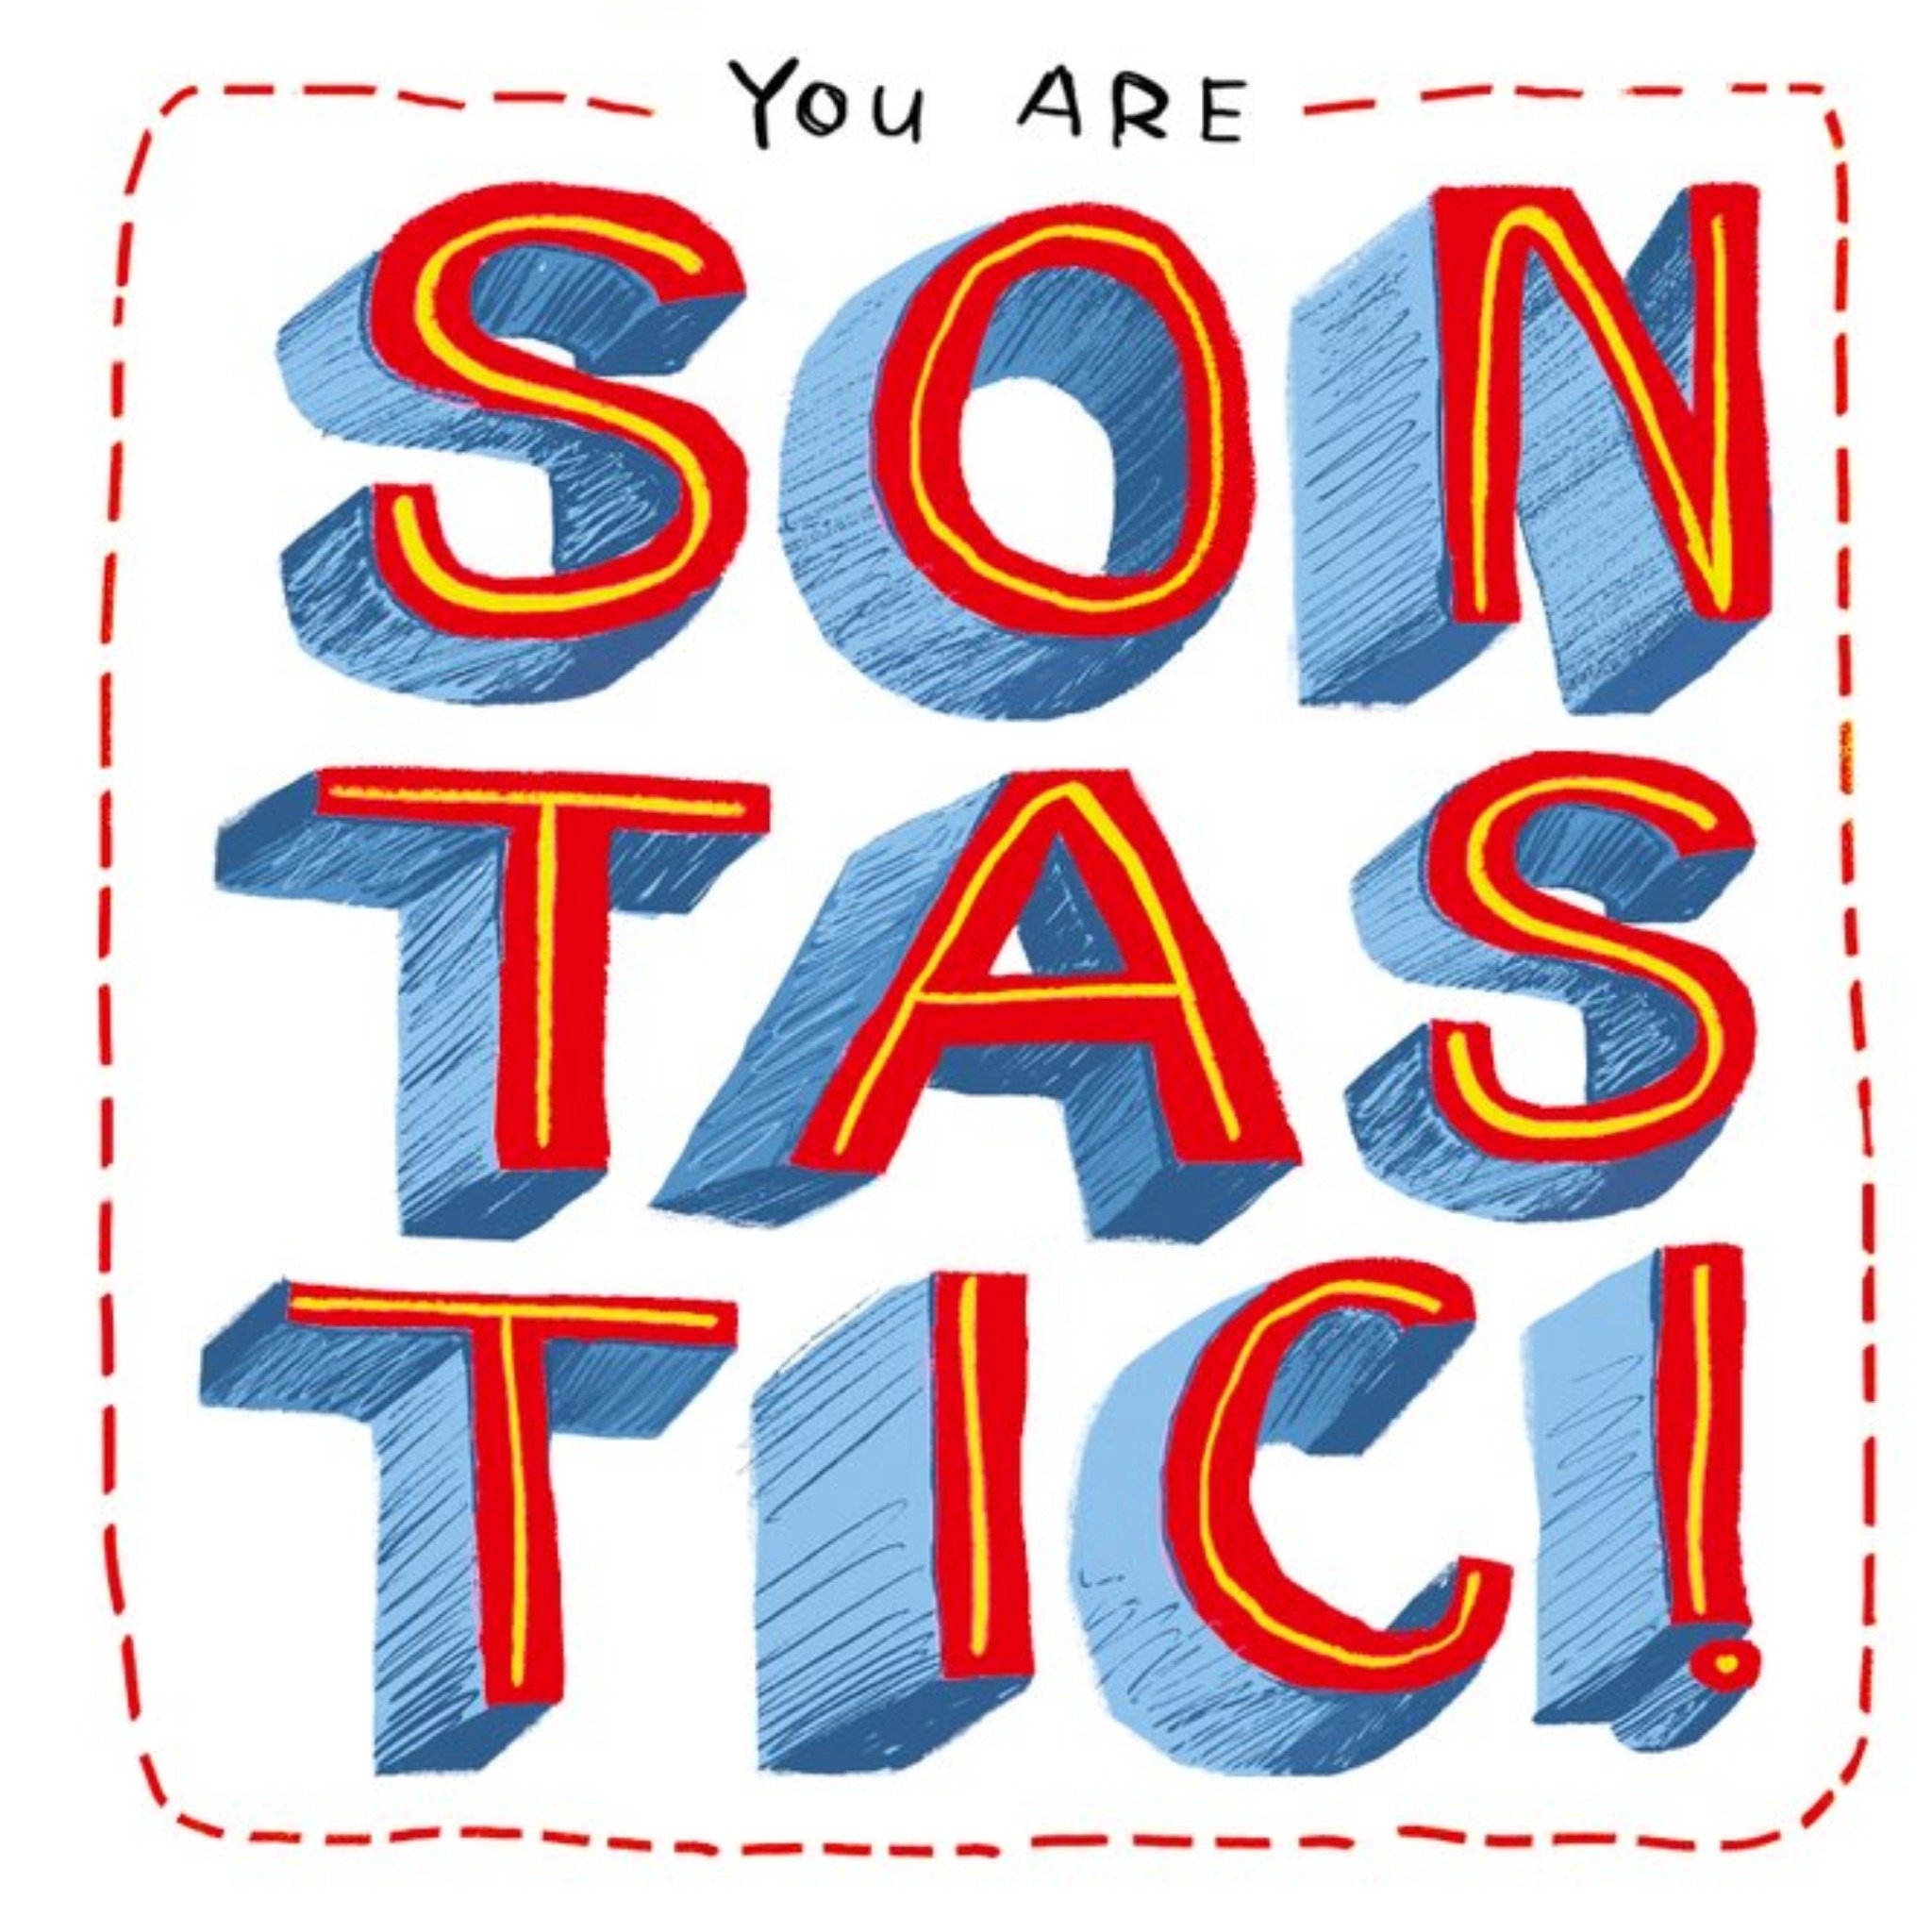 Moonpig Typographical Son-Tas-Tic Birthday Card, Square